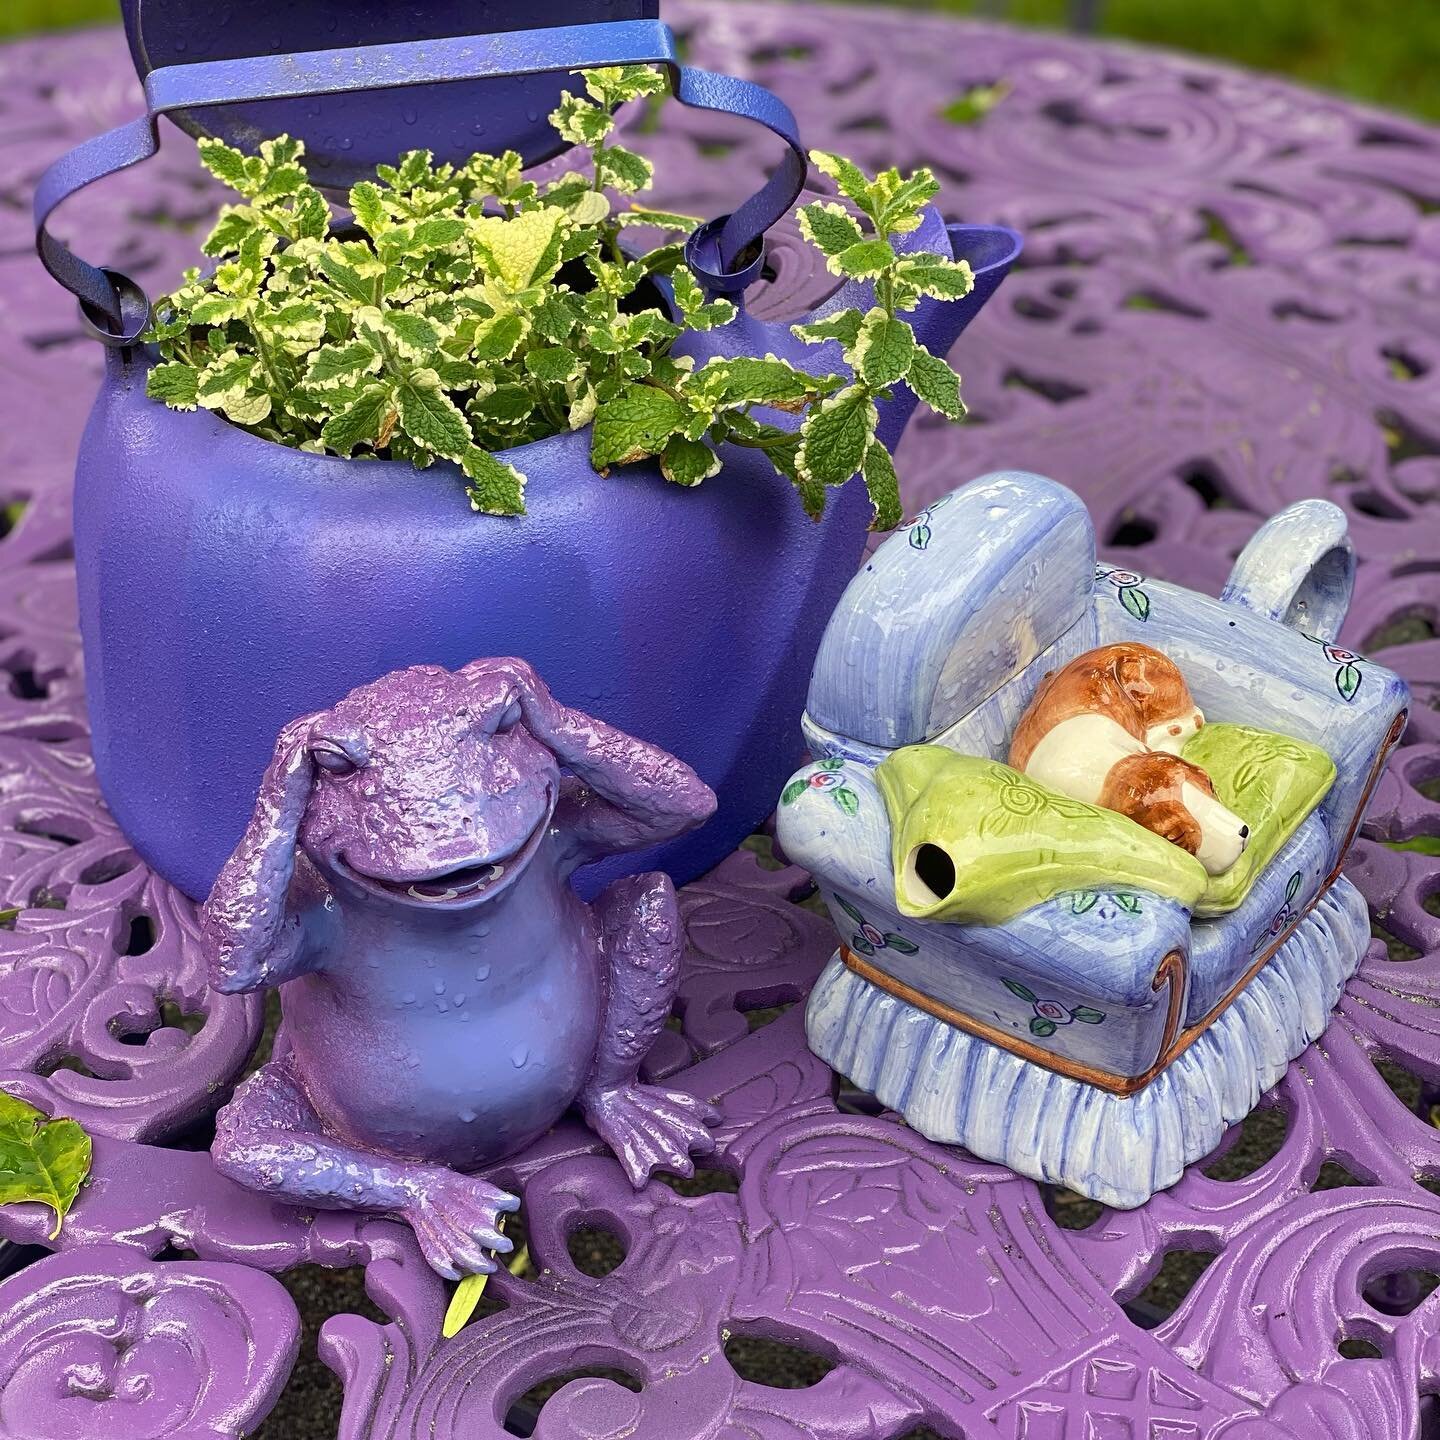 The Purple Frog Tea Room at Magical Moon Farm &amp; Foundation 🍵 
.
.
.
.
.
#magicalmoon #magicalmoonfarm #magicalmoonfoundation #marshfieldma #tearoom